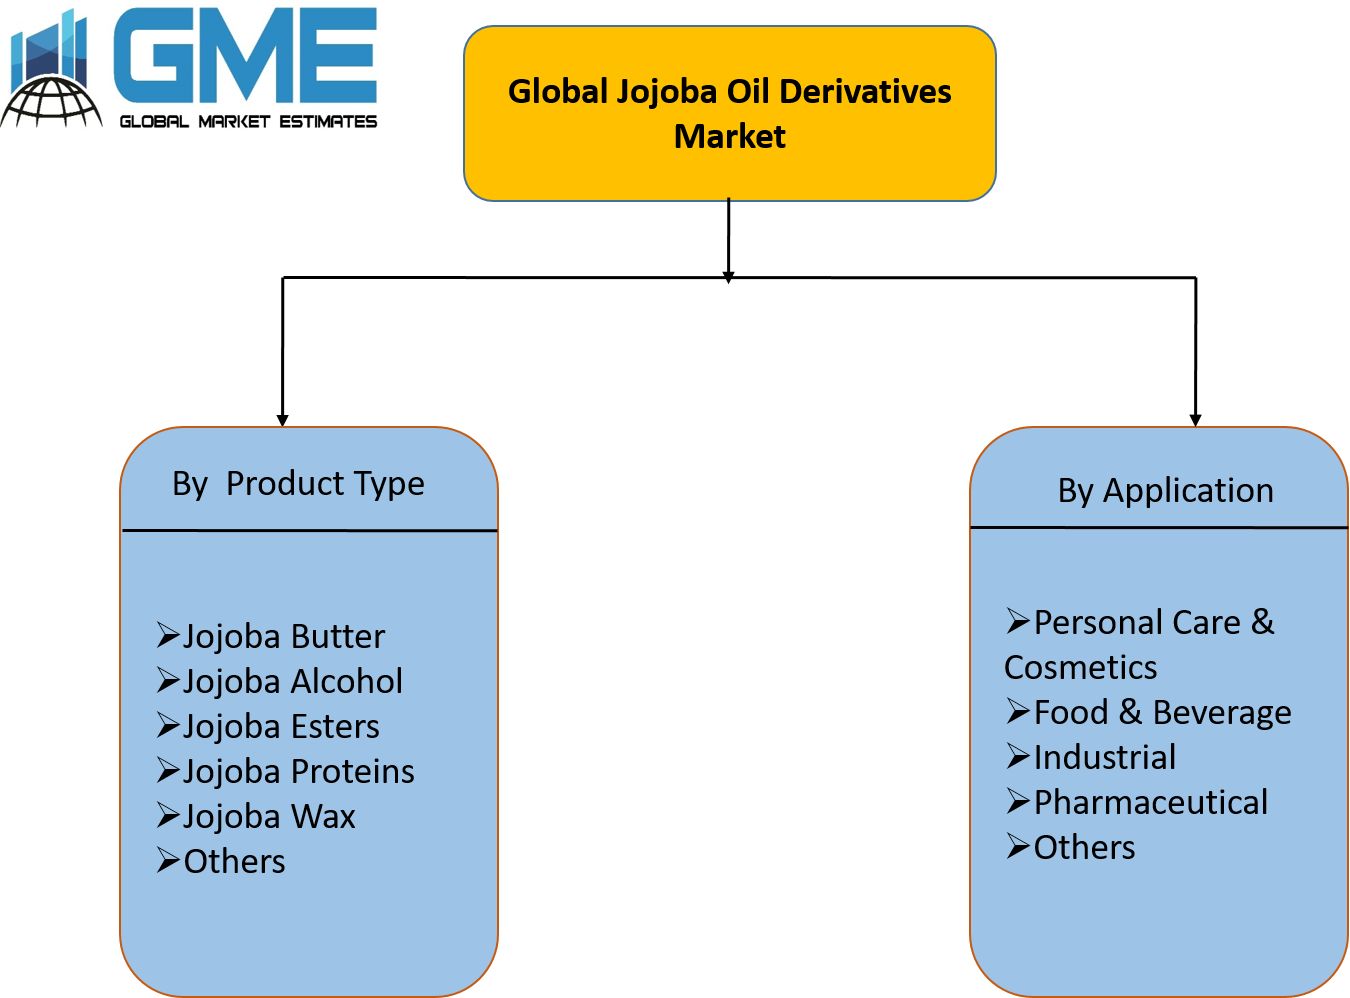 Global Jojoba Oil Derivatives Market Segmentation